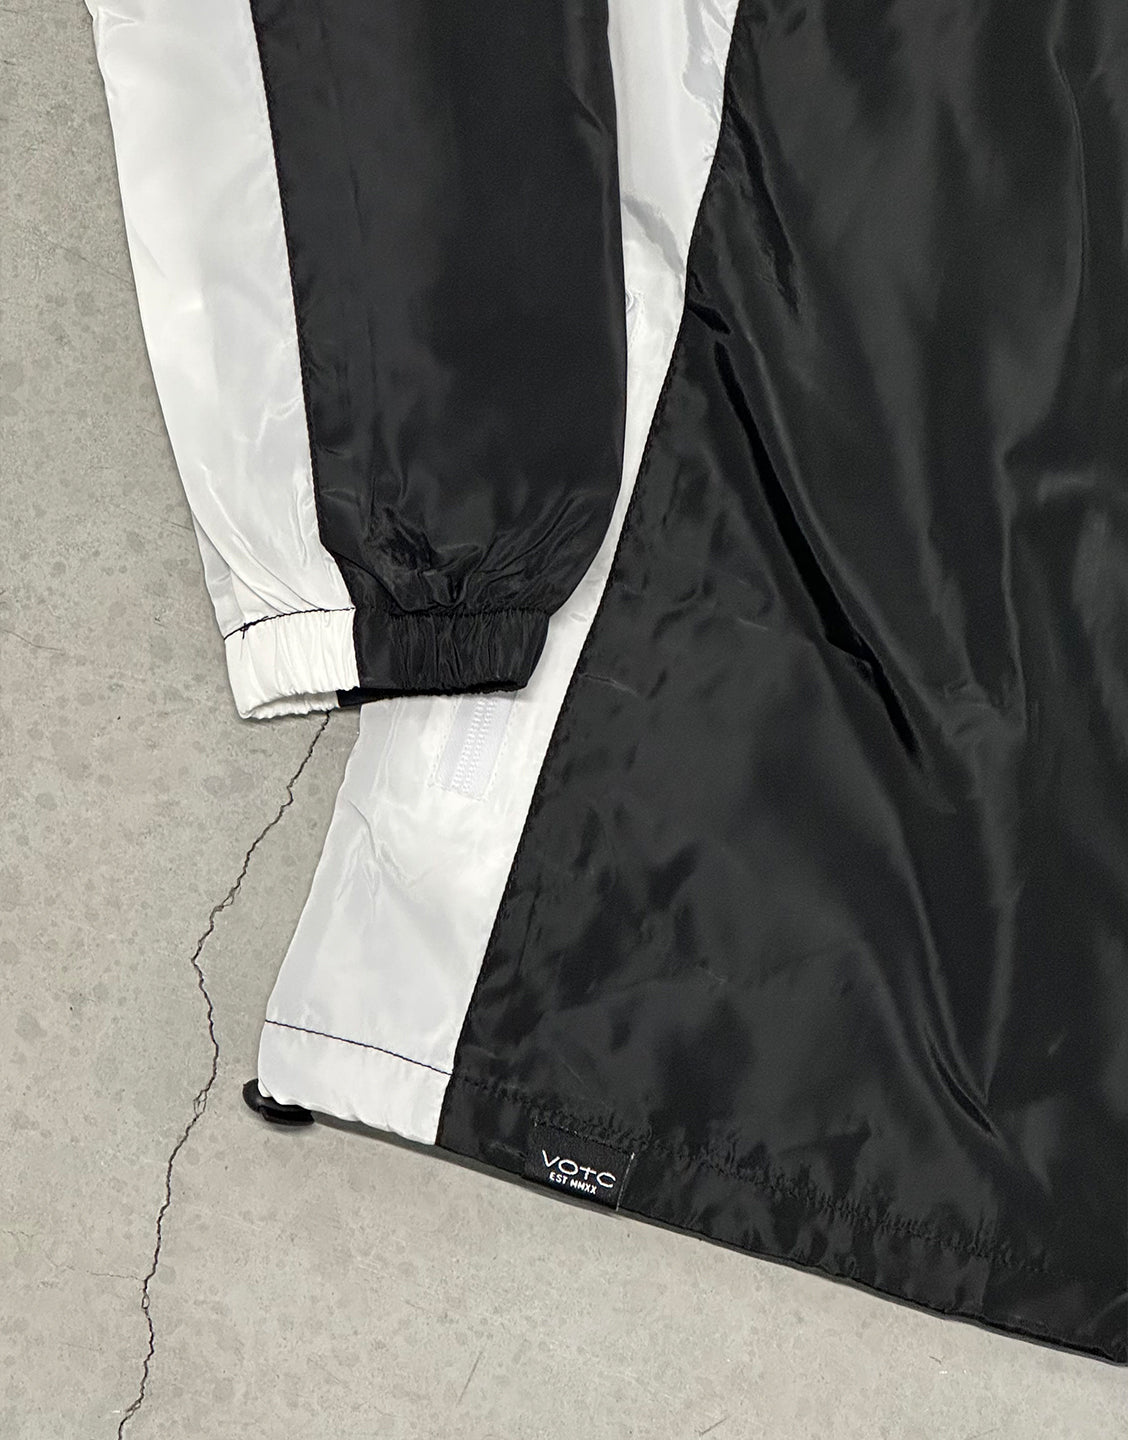 Trust God Windbreaker Zip-Up Jacket - Black - VOTC Clothing